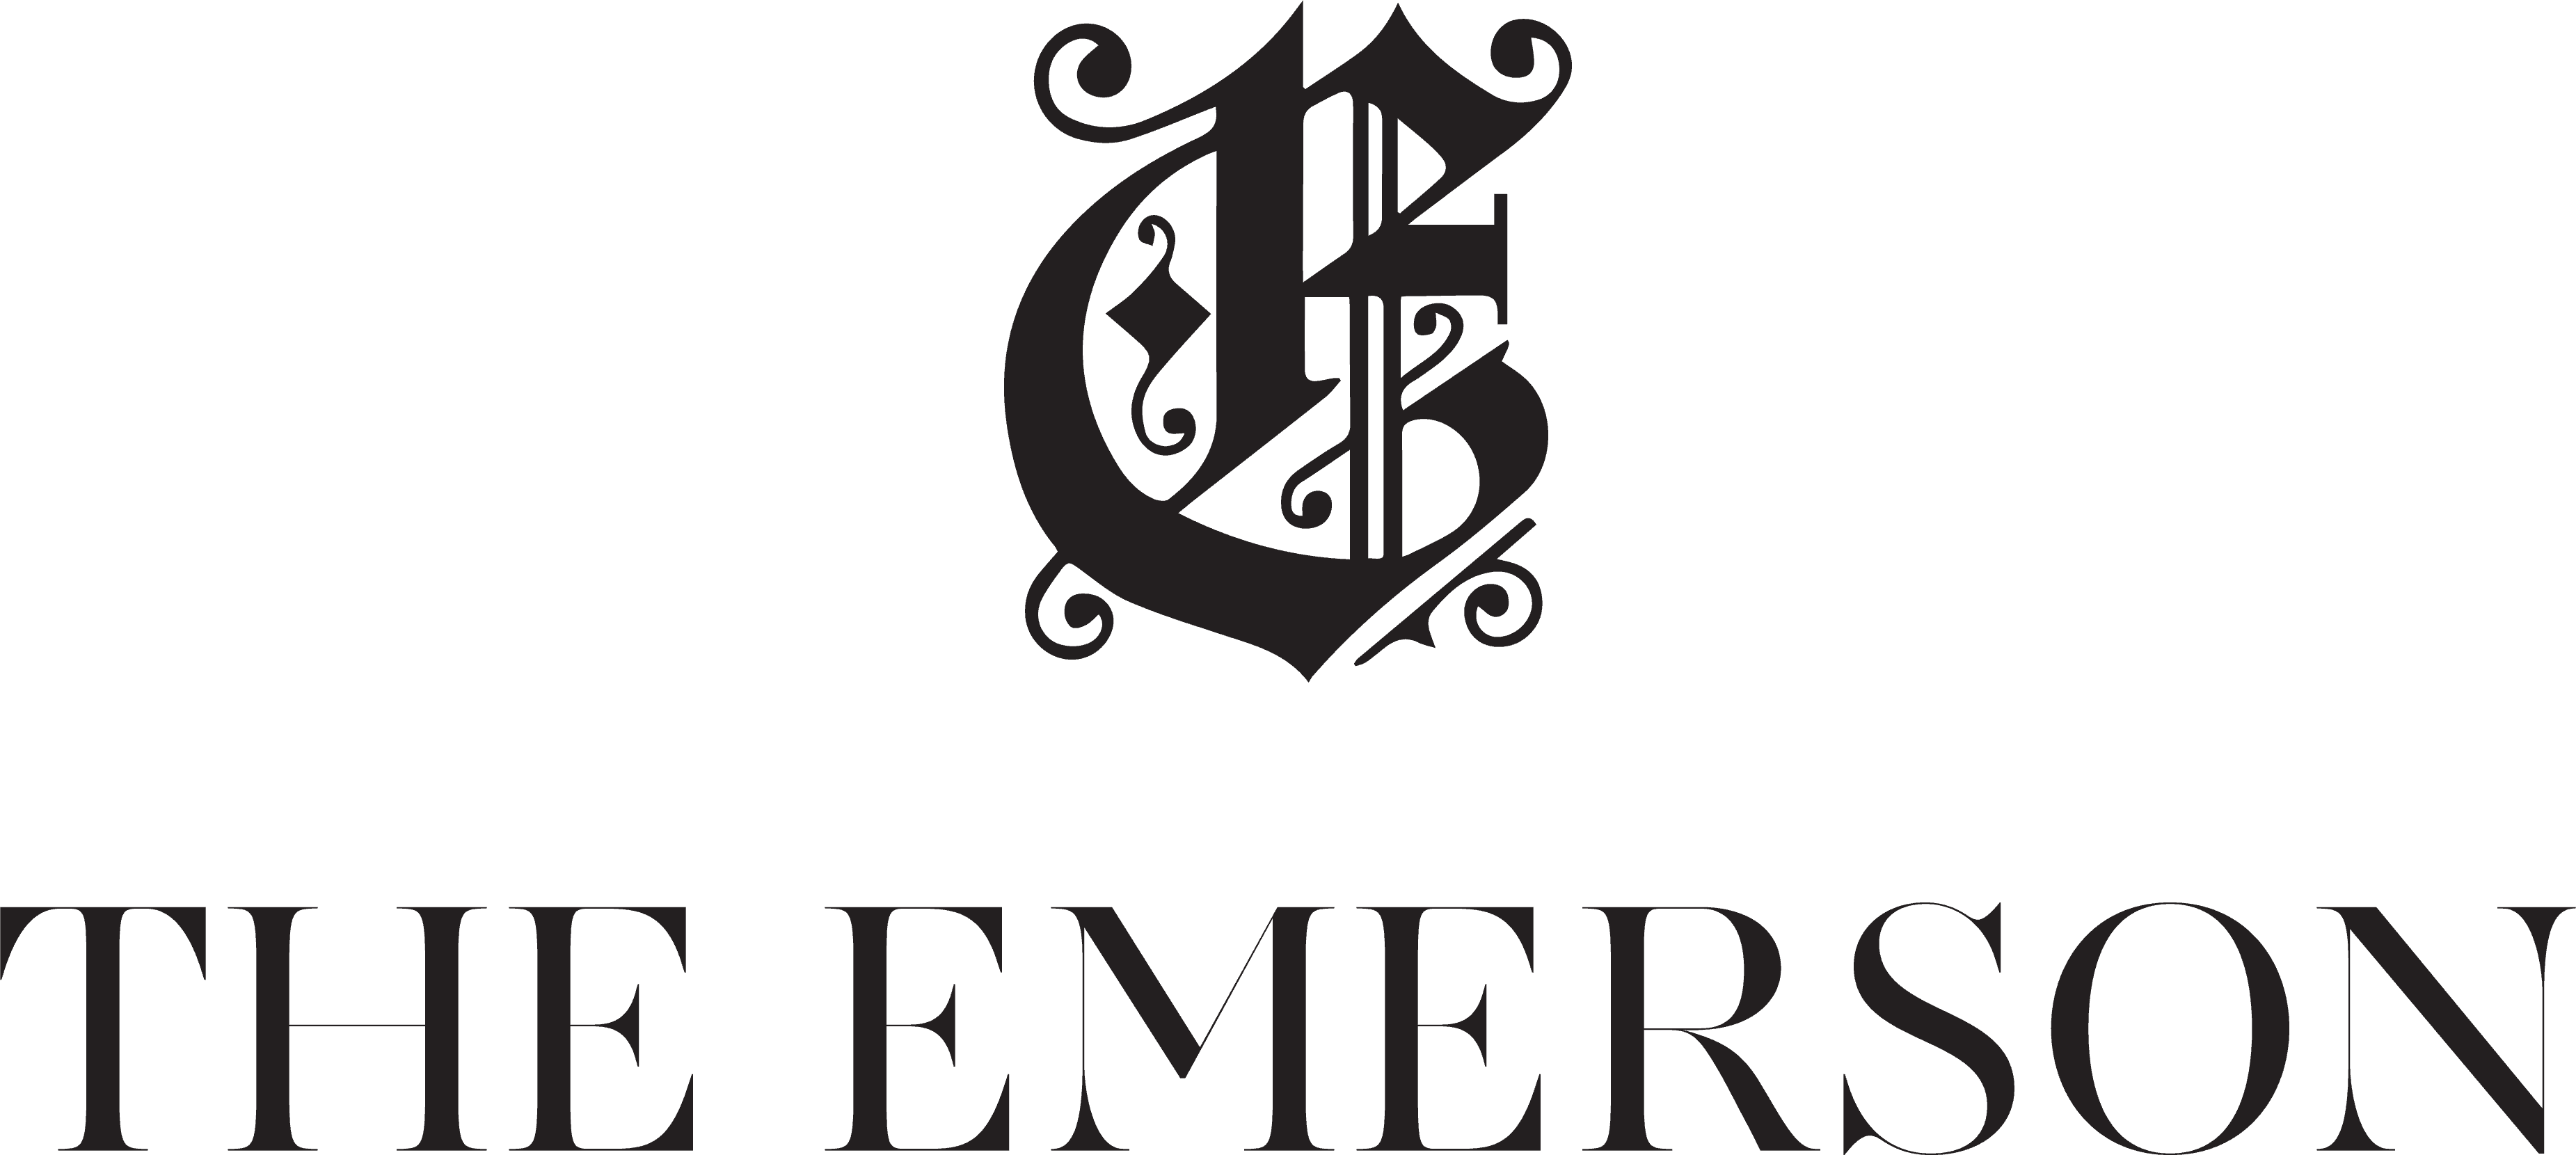 Emerson Logo - The Emerson